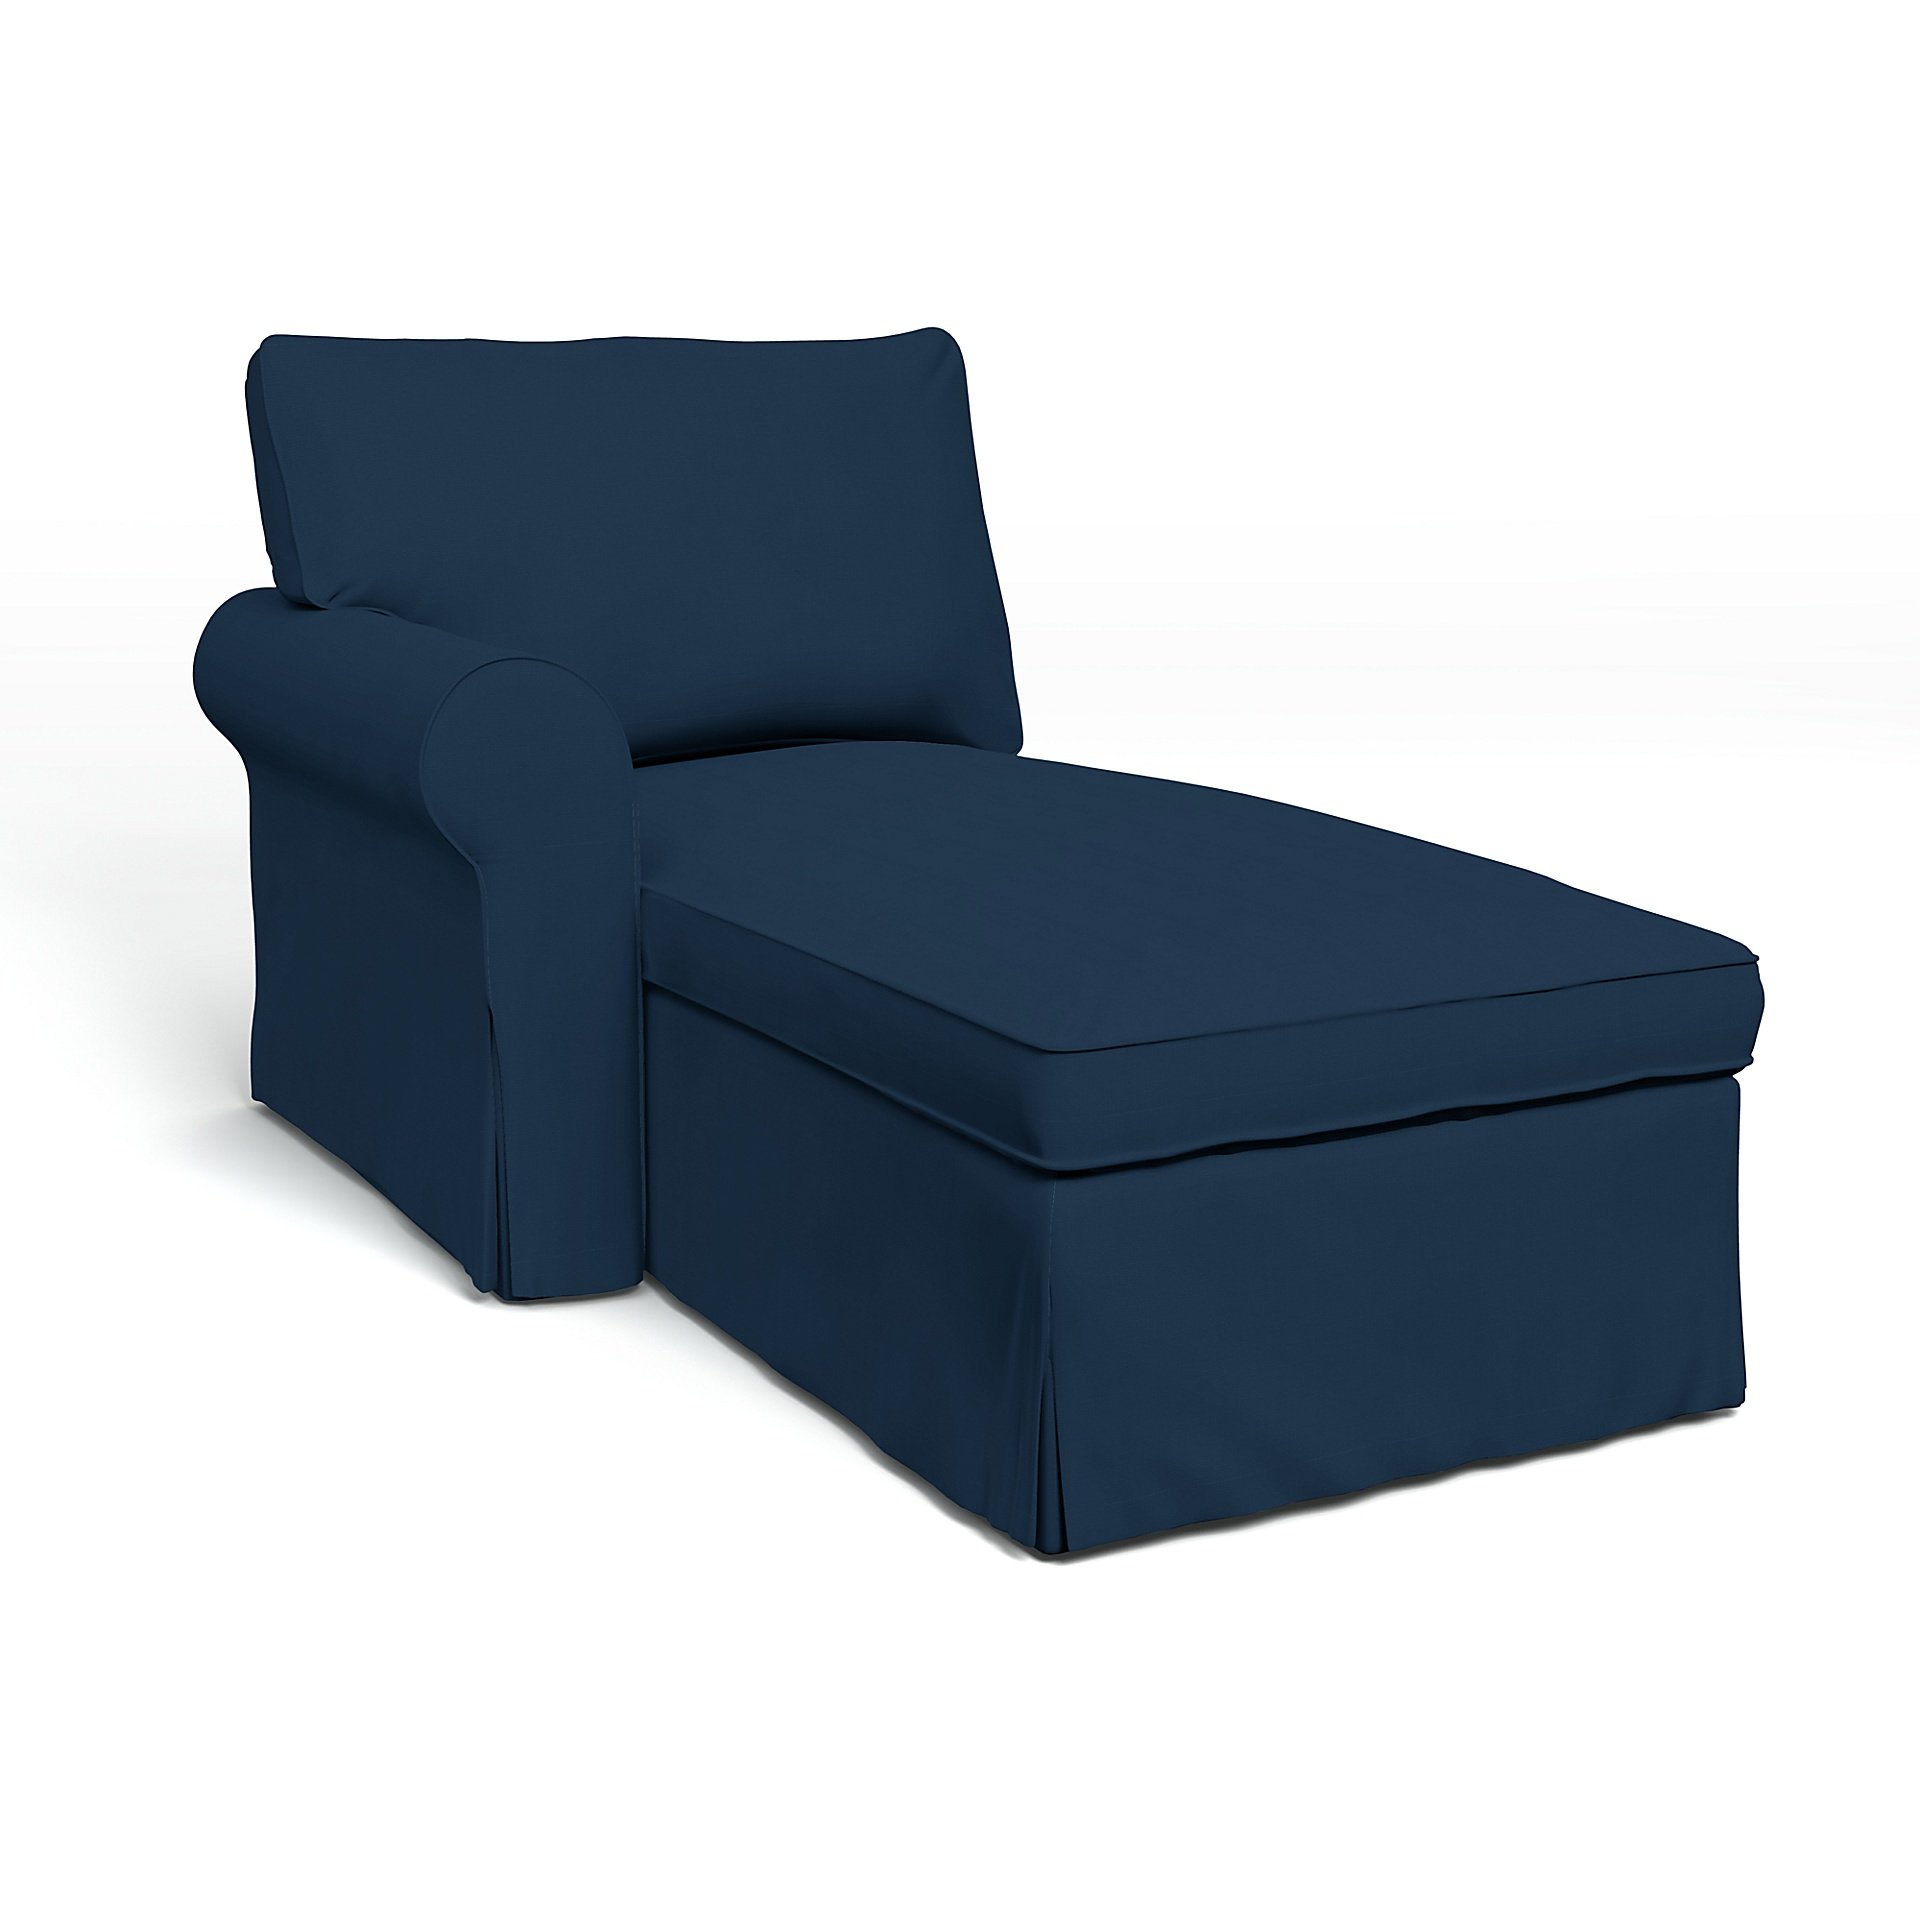 IKEA - Ektorp Chaise with Left Armrest Cover, Deep Navy Blue, Cotton - Bemz